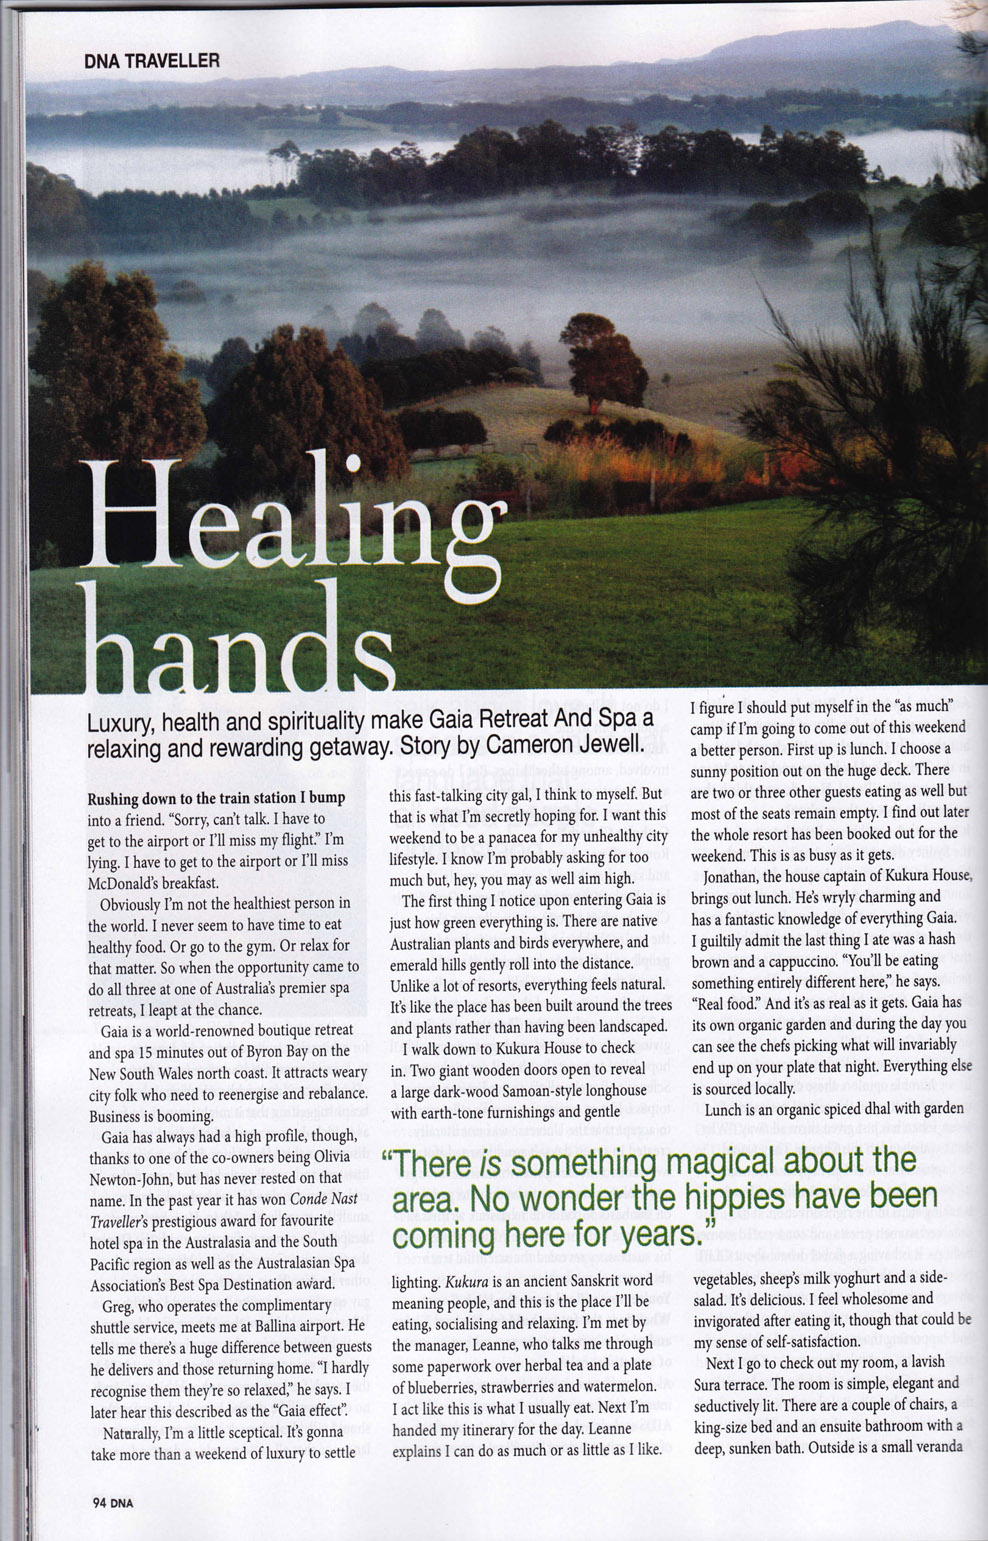 Healing hands (about Gaia retreat) - Dna